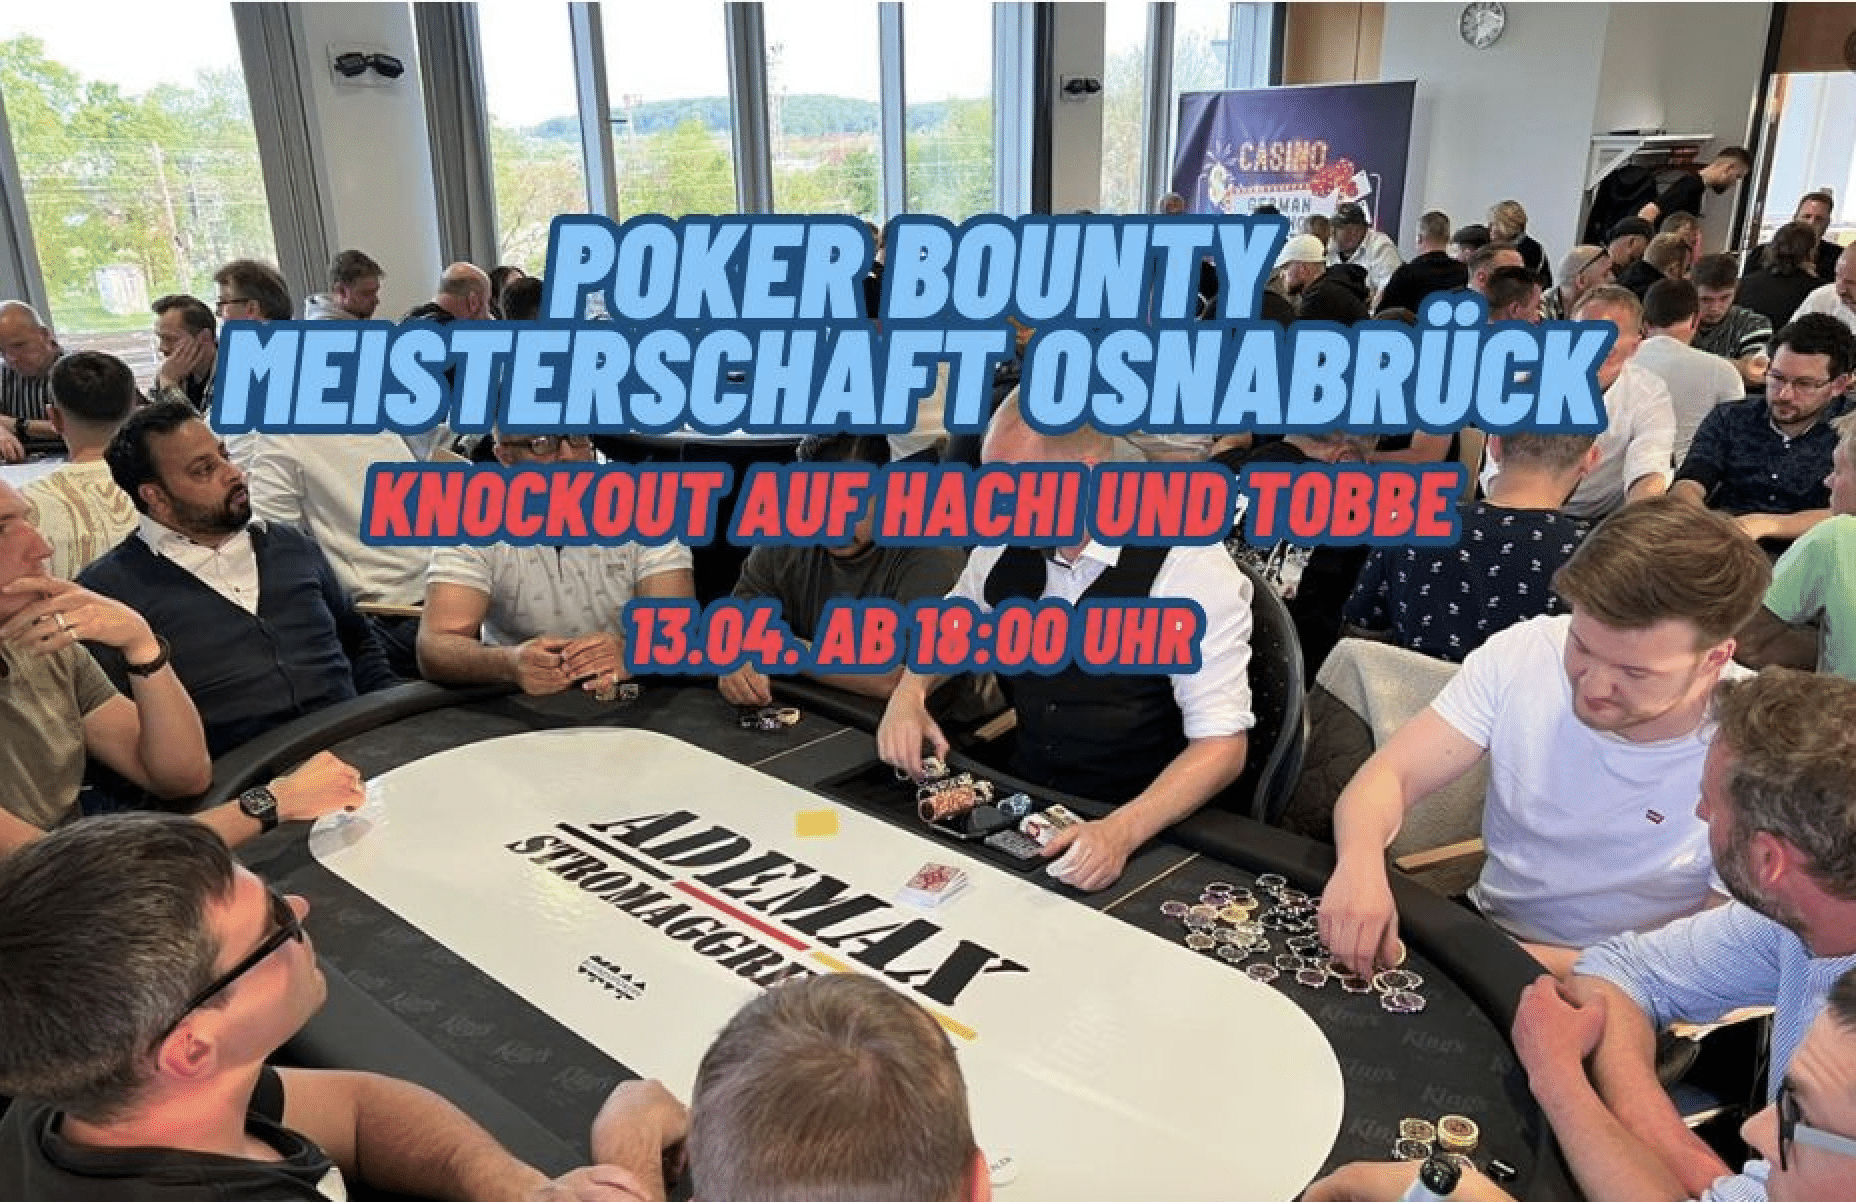 Poker Bounty Meisterschaft Osnabrück – Knockout auf Hachi und Tobbe (Texas Holdem – Pokern in Niedersachsen) – powered by Bullets Playing Cards